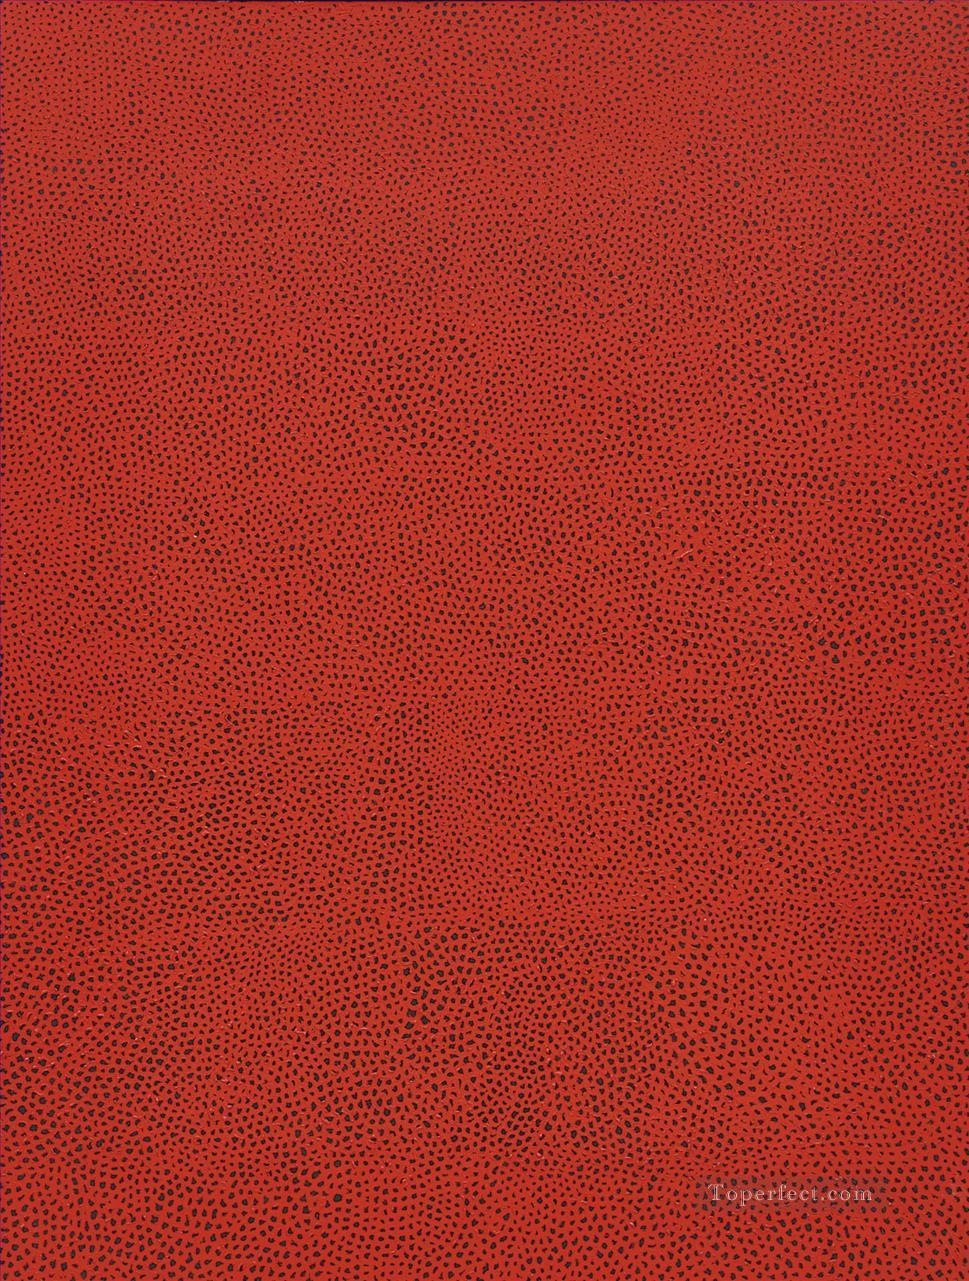 NO RED B Yayoi Kusama Pop art minimalism feminist Oil Paintings